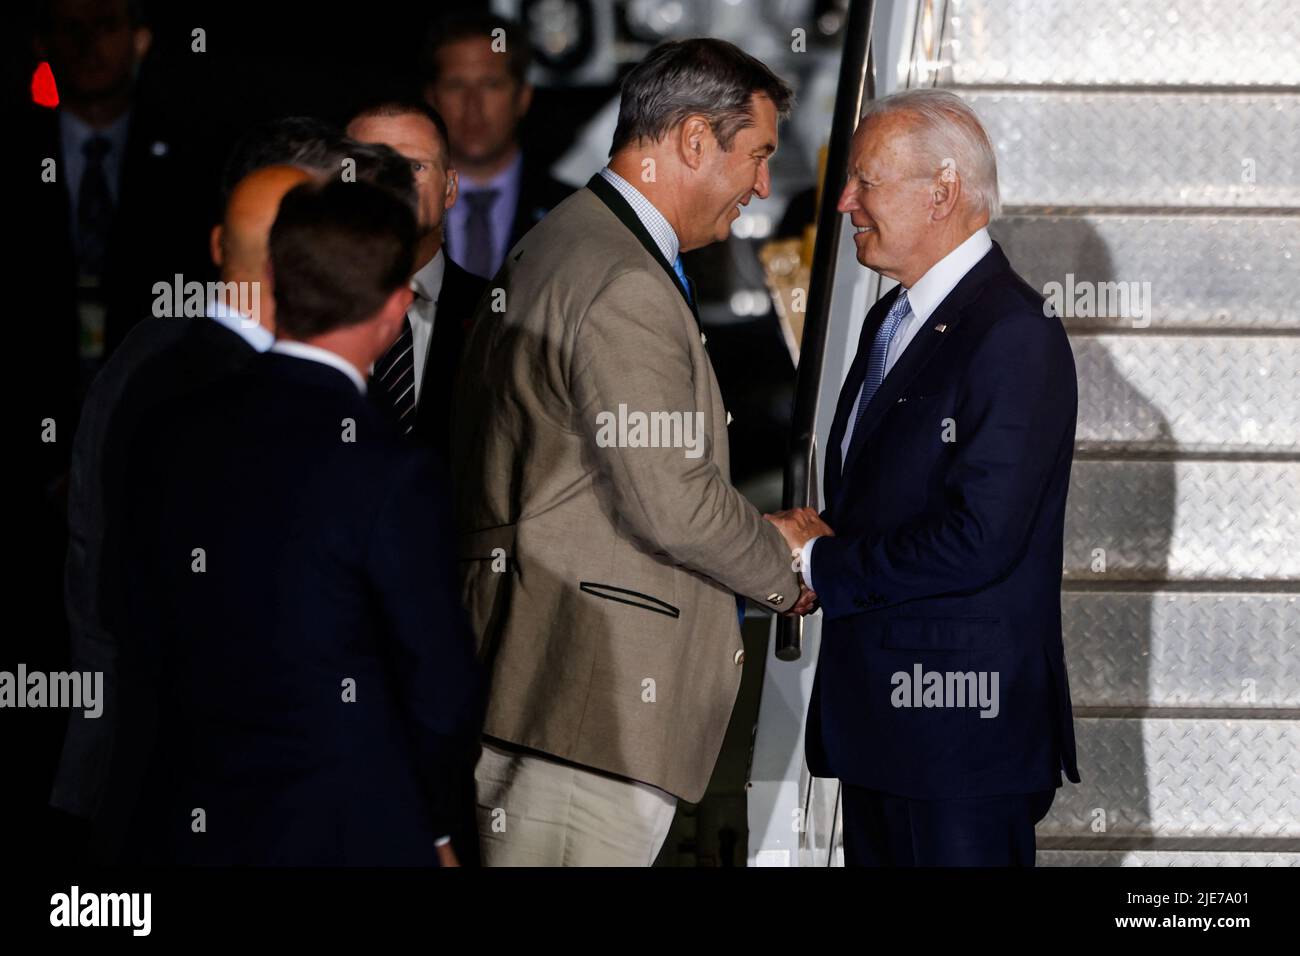 U.S. President Joe Biden is welcomed by Bavaria's State Premier Markus Soeder as he arrives for a G7 summit at Munich International Airport, near Munich, Germany June 25, 2022. REUTERS/Michaela Rehle Stock Photo